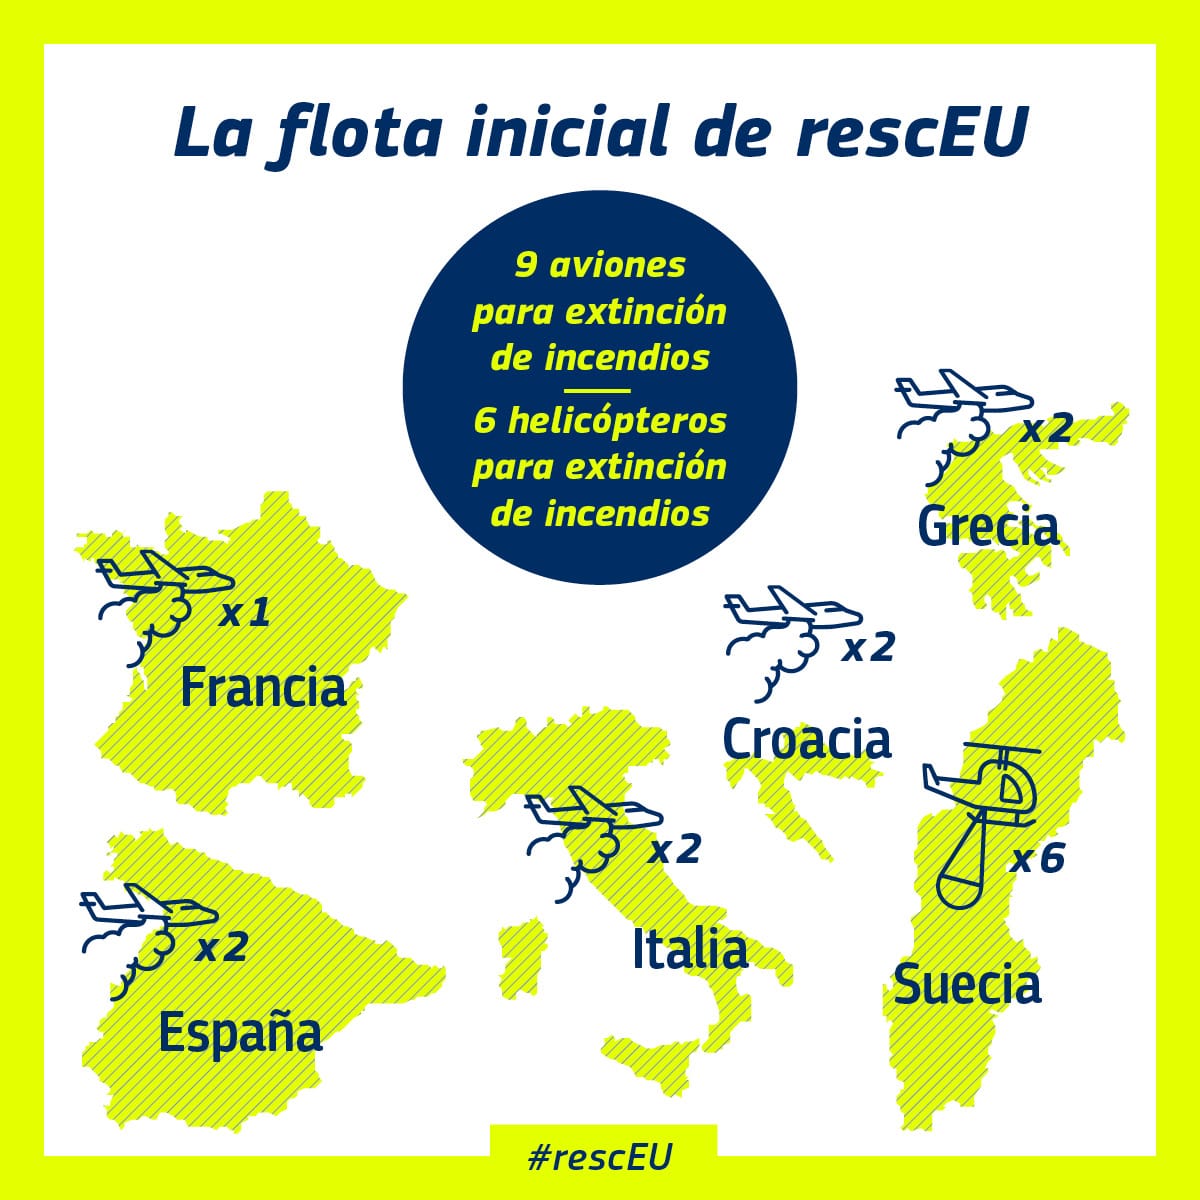 #rescEU es la reserva, a nivel europeo 🇪🇺, de capacidades de Protección Civil, que tiene por objeto apoyar a los países afectados por catástrofes
#EUCivPro
#EUSaveLives